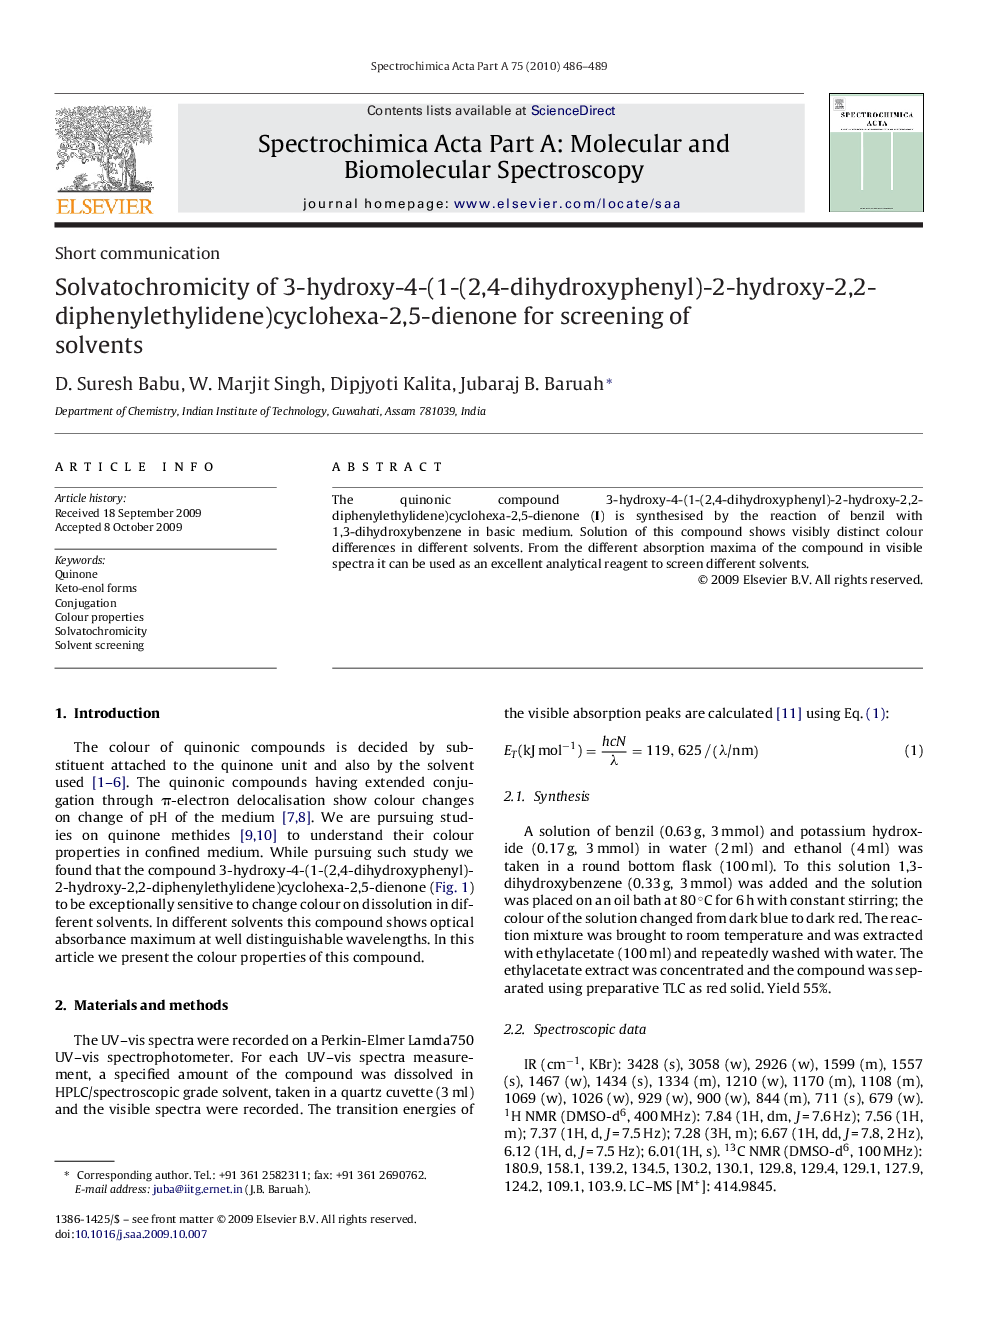 Solvatochromicity of 3-hydroxy-4-(1-(2,4-dihydroxyphenyl)-2-hydroxy-2,2-diphenylethylidene)cyclohexa-2,5-dienone for screening of solvents